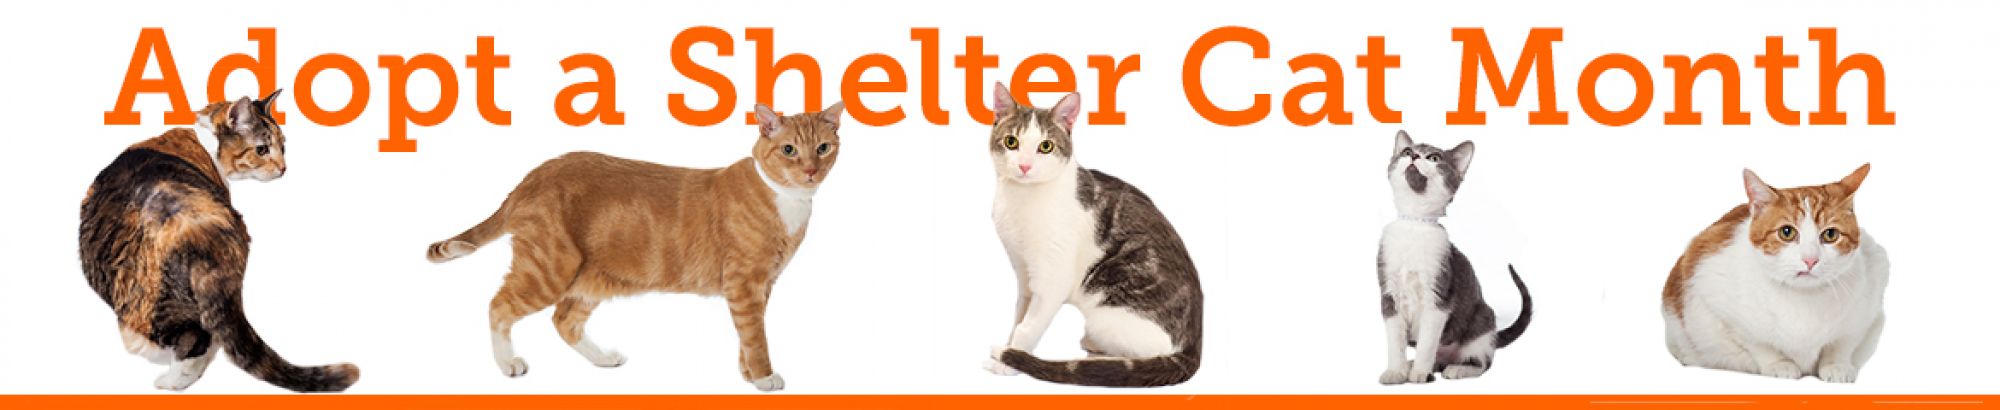 Adopt a Shelter Cat Month Campaign | ASPCA